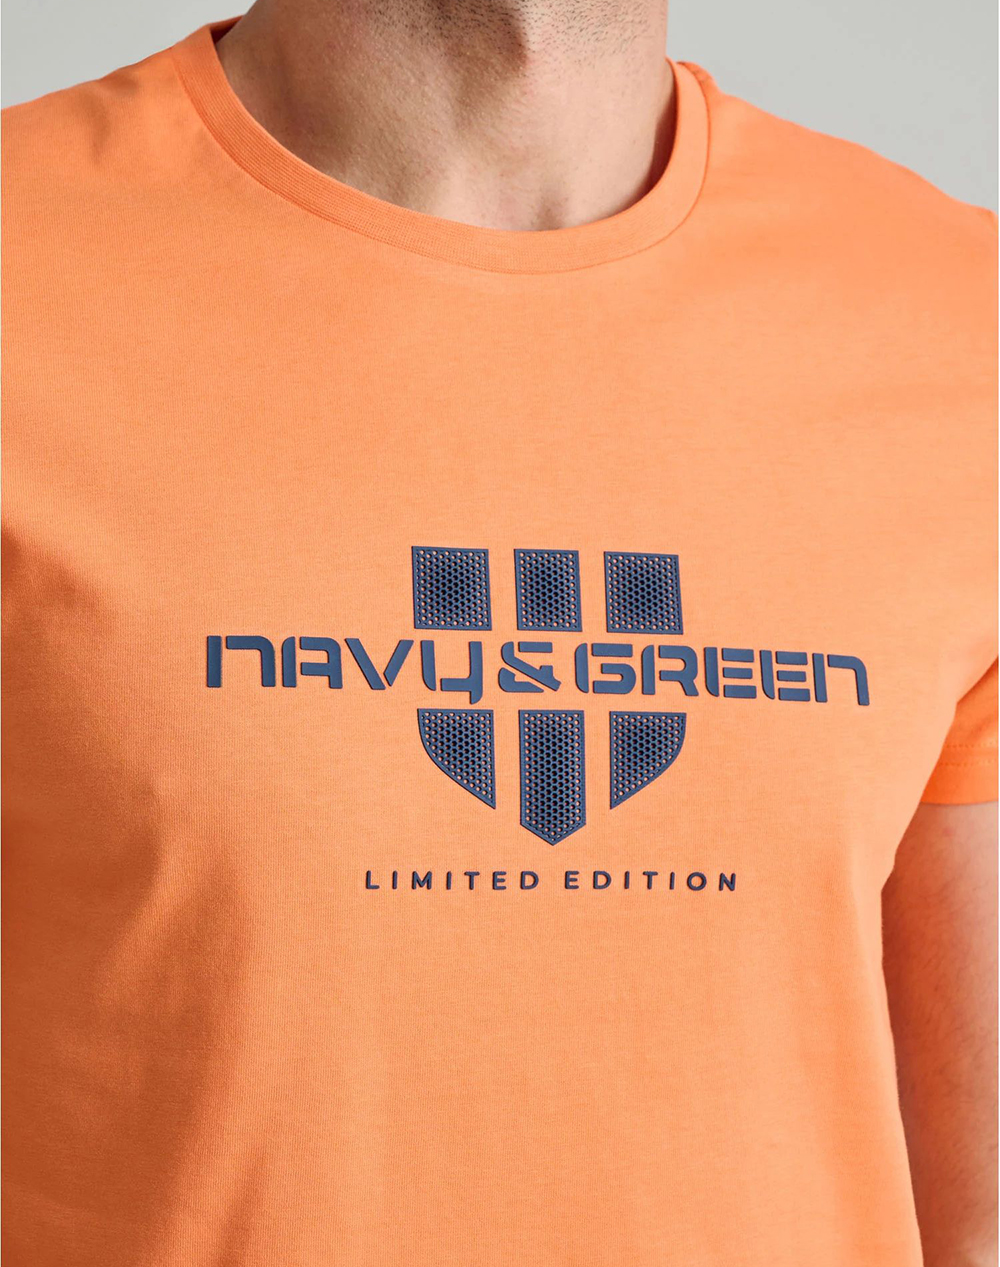 NAVY&GREEN T-SHIRTS-Τ-SHIRTS